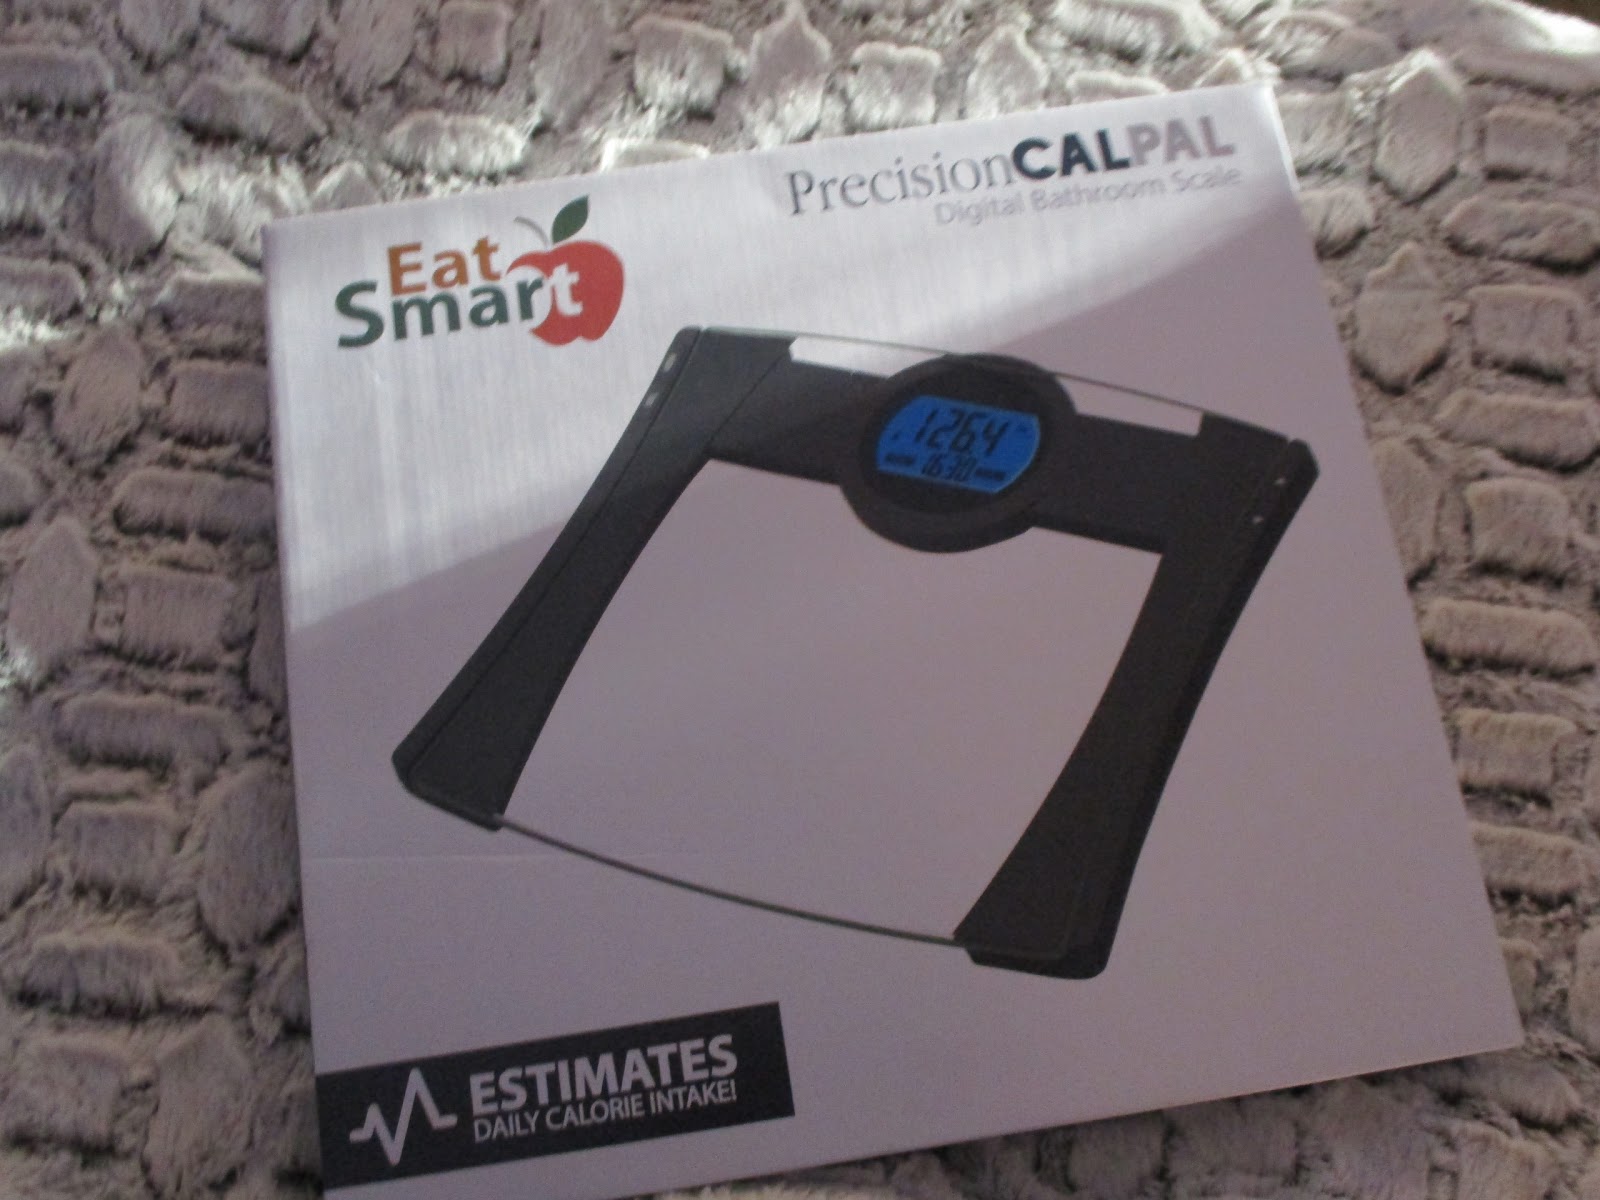 Missy's Product Reviews : Eat Smart Precision CalPal Digital Bathroom Scale  #NewYearHealthGoal